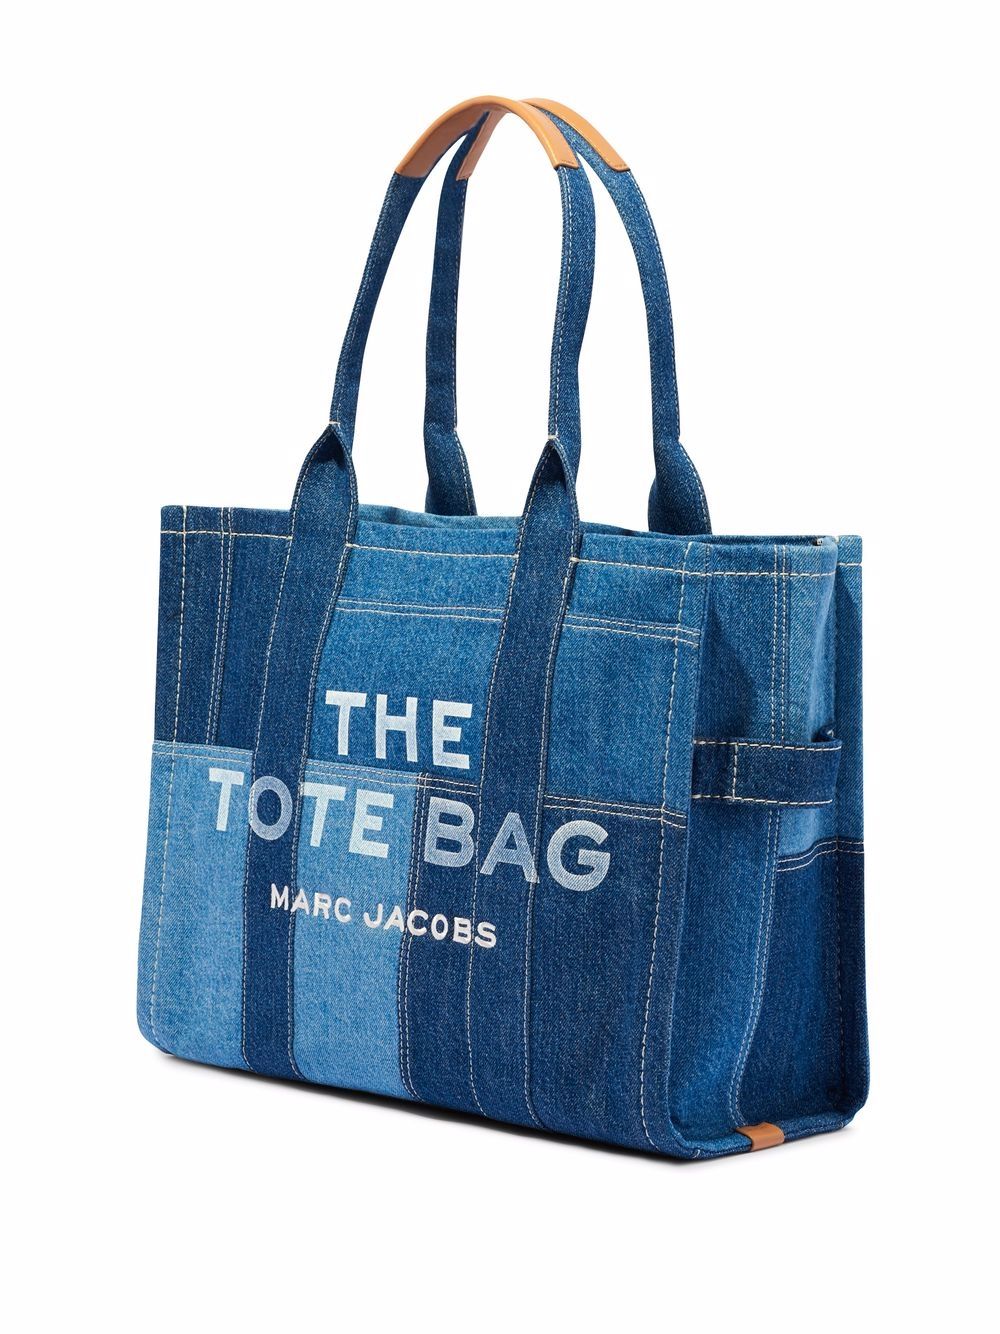 Marc Jacobs The Denim Large Tote Bag - Blue